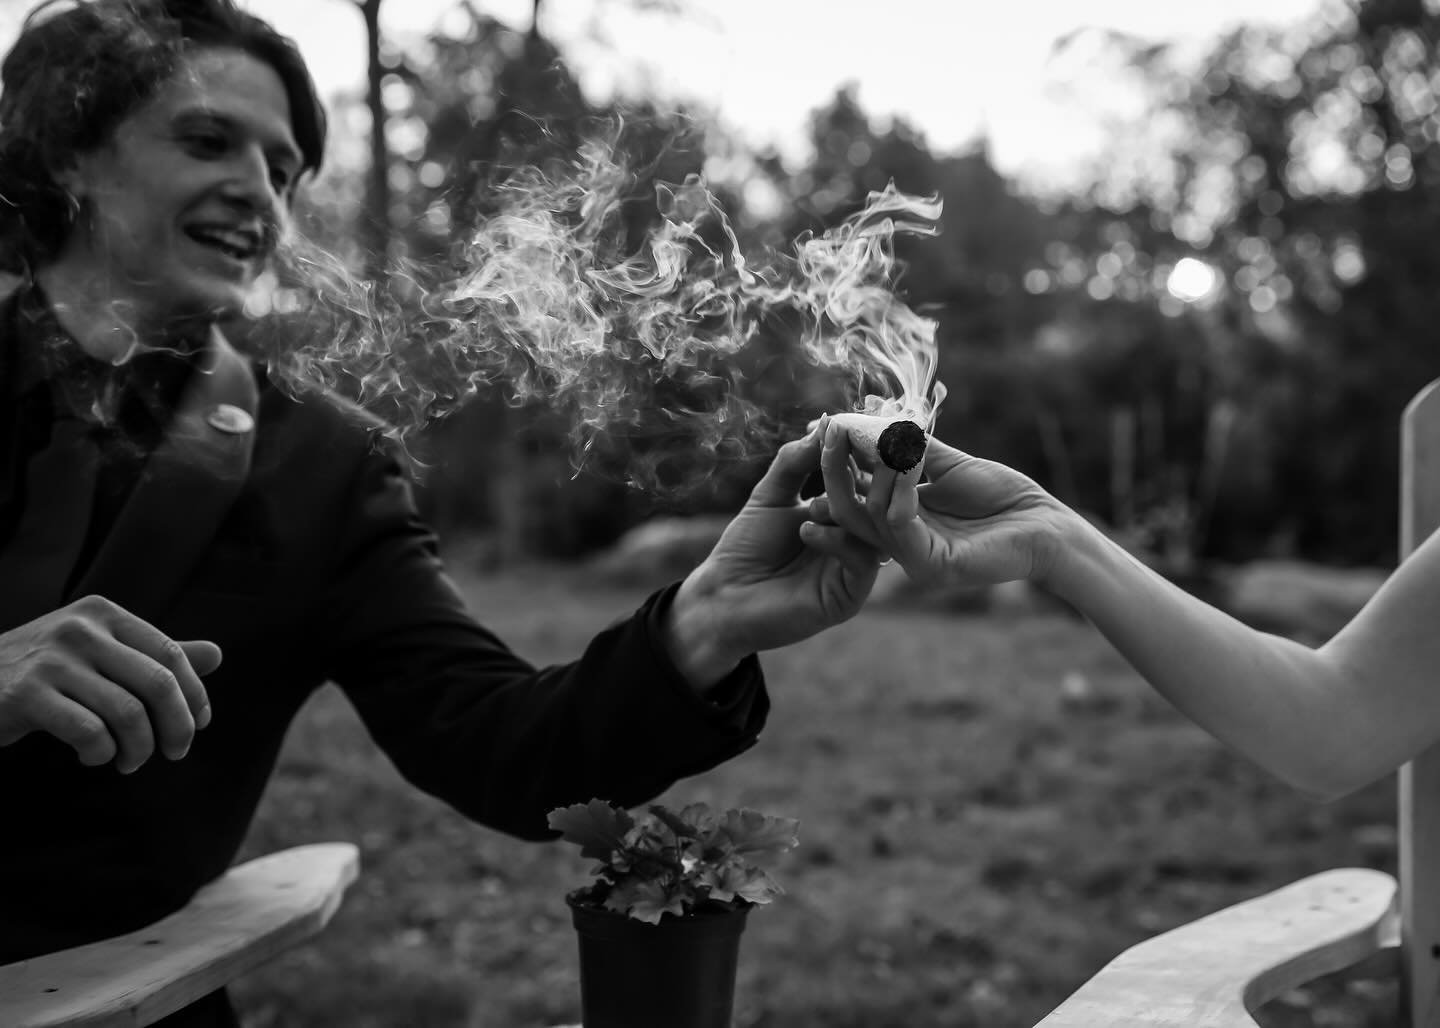 Happy 420 Friends! 😁 We love photographing Canna Weddings! 👍

@photos_by_kintz 
@madrivervalley 
@vermontweddings 
@omgitsmikaylaaa 
@fizetteysfotos 
#photosbykintz #420 #happy420 #vermontweddingphotographer #marylandweddingphotographer